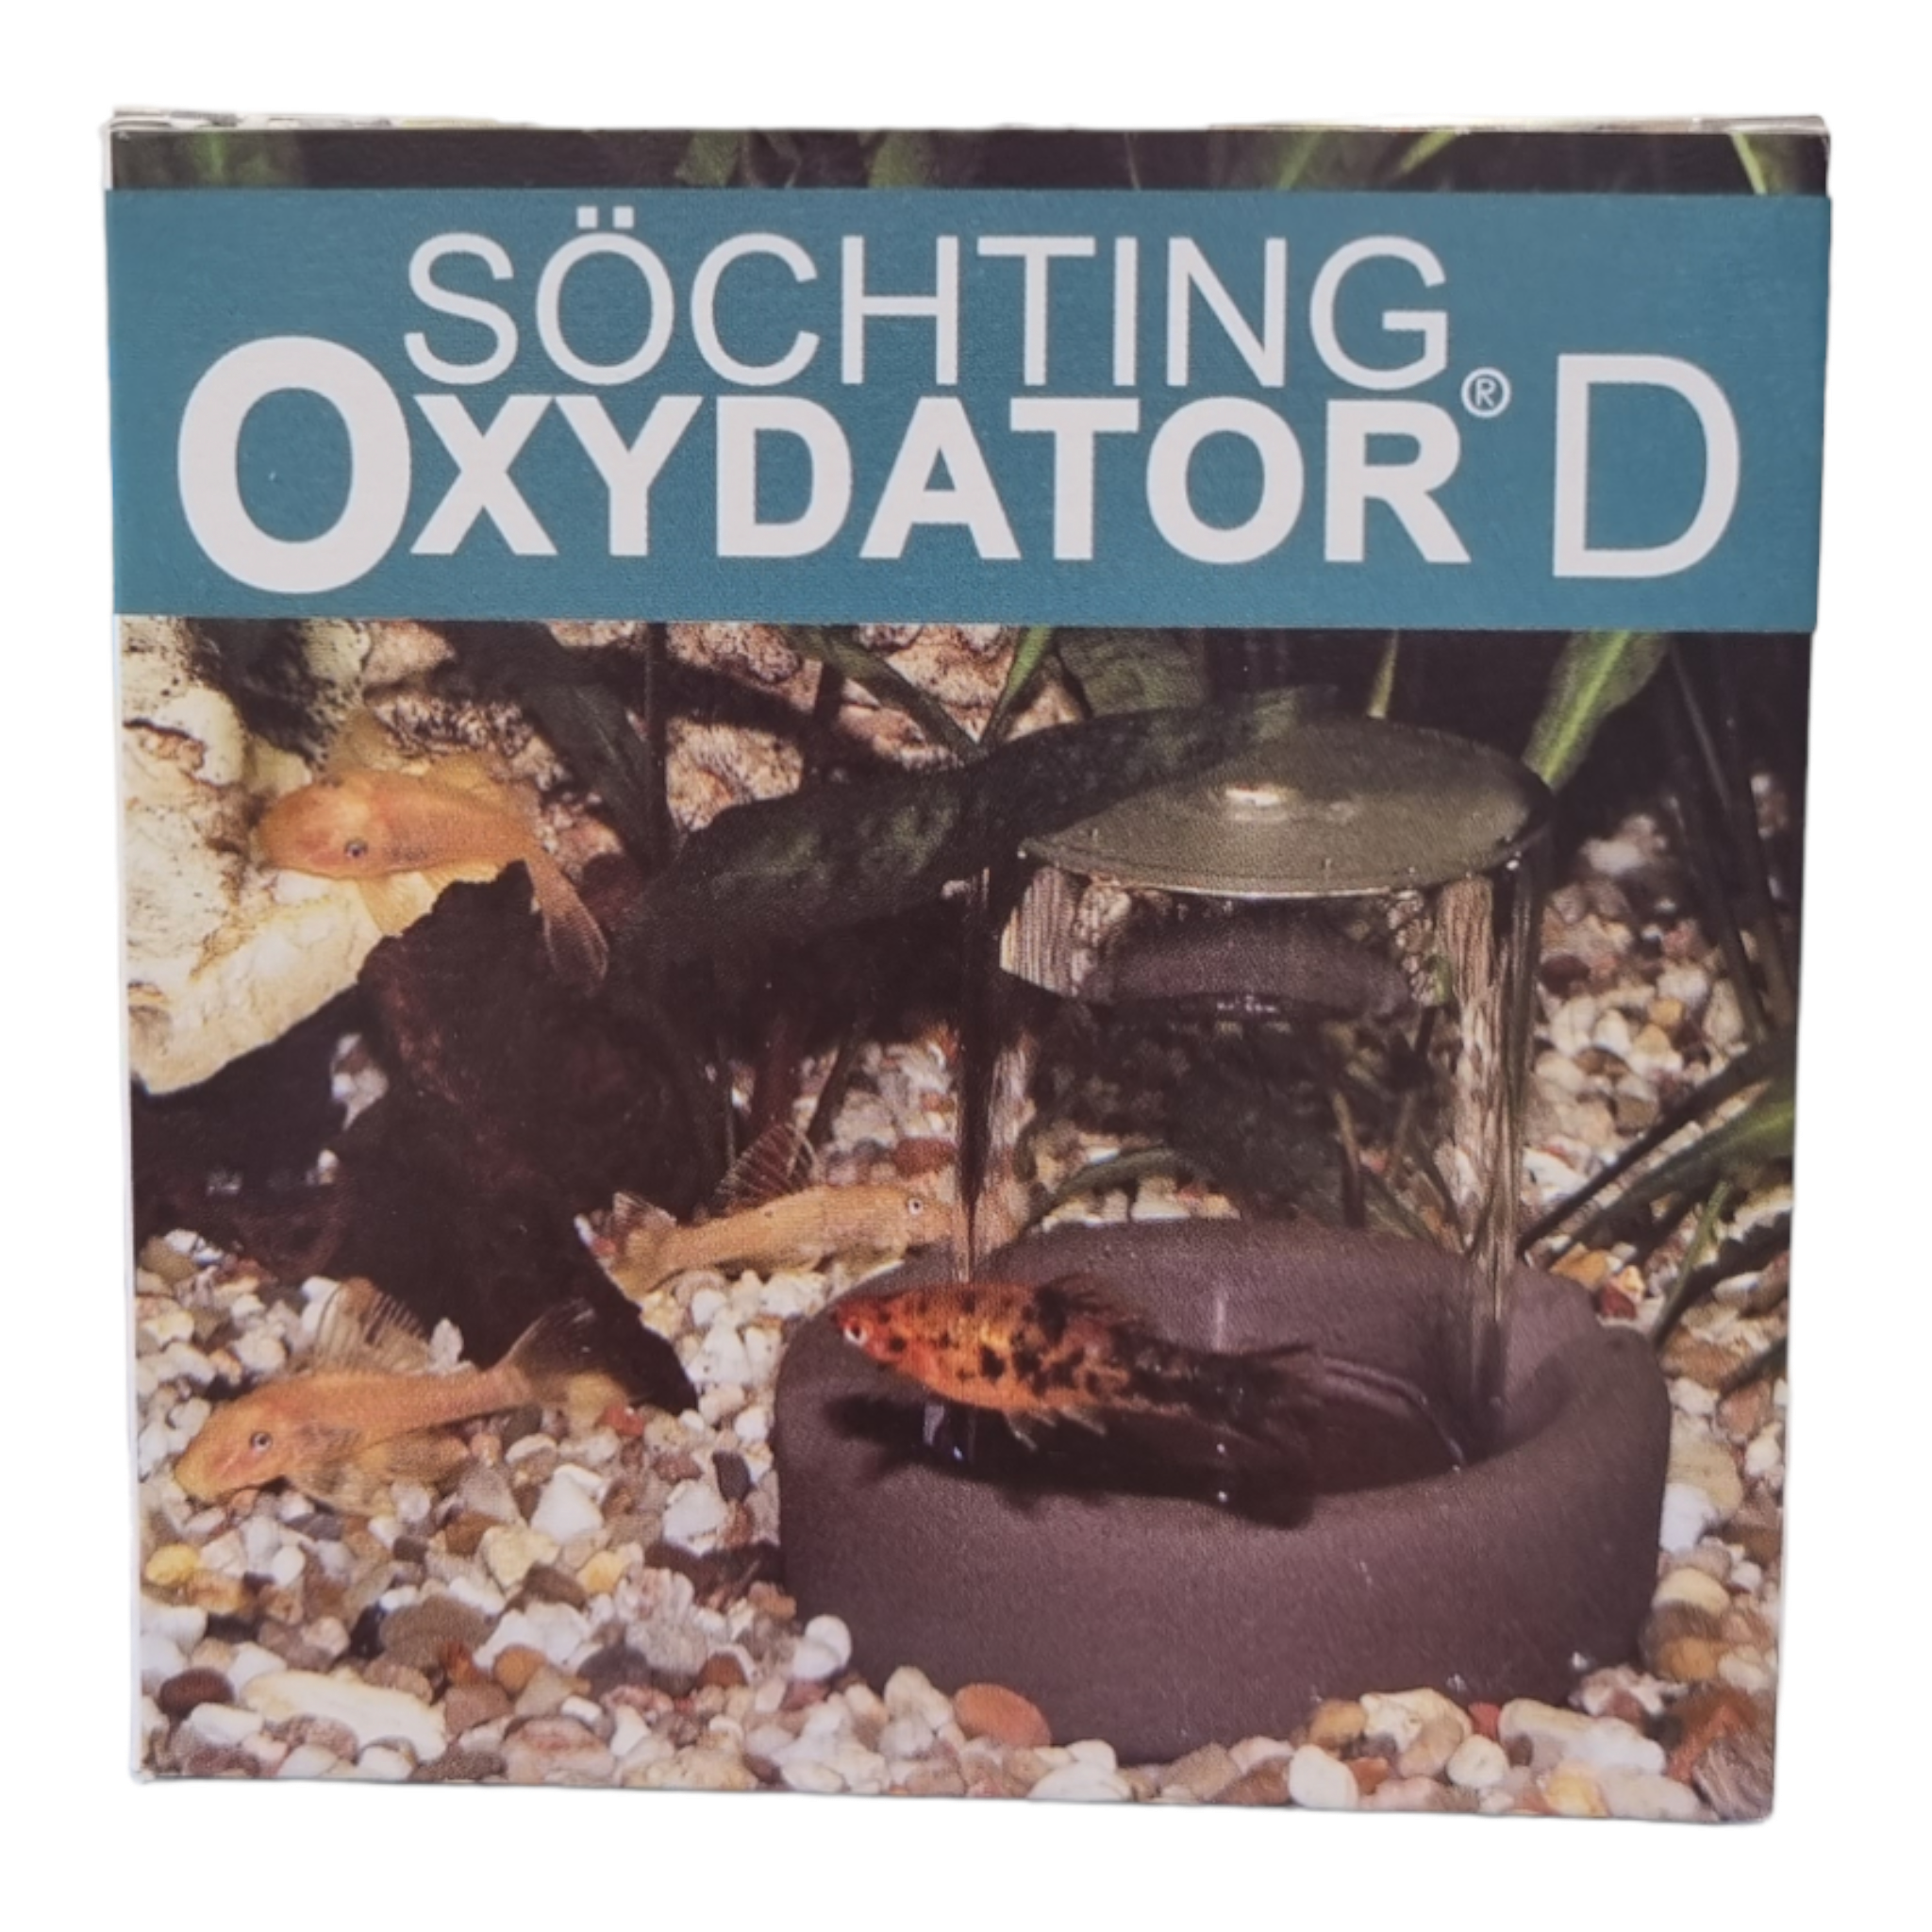 Söchting Oxydator D